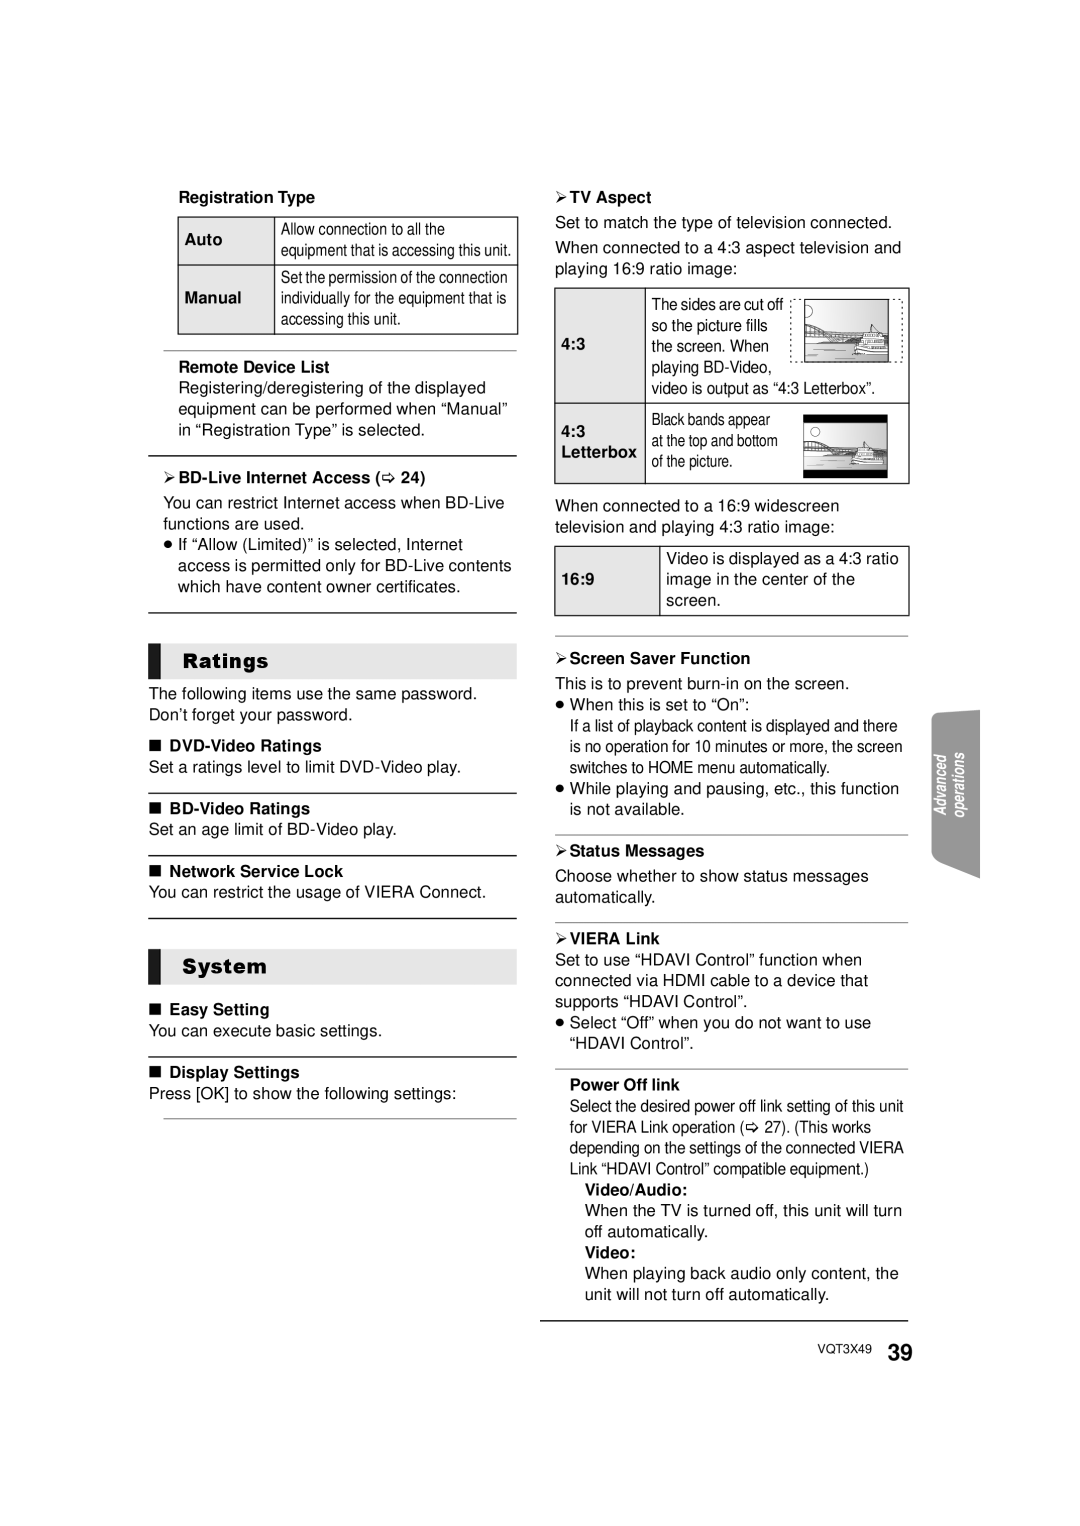 Panasonic SC-BTT490 owner manual Ratings, System 